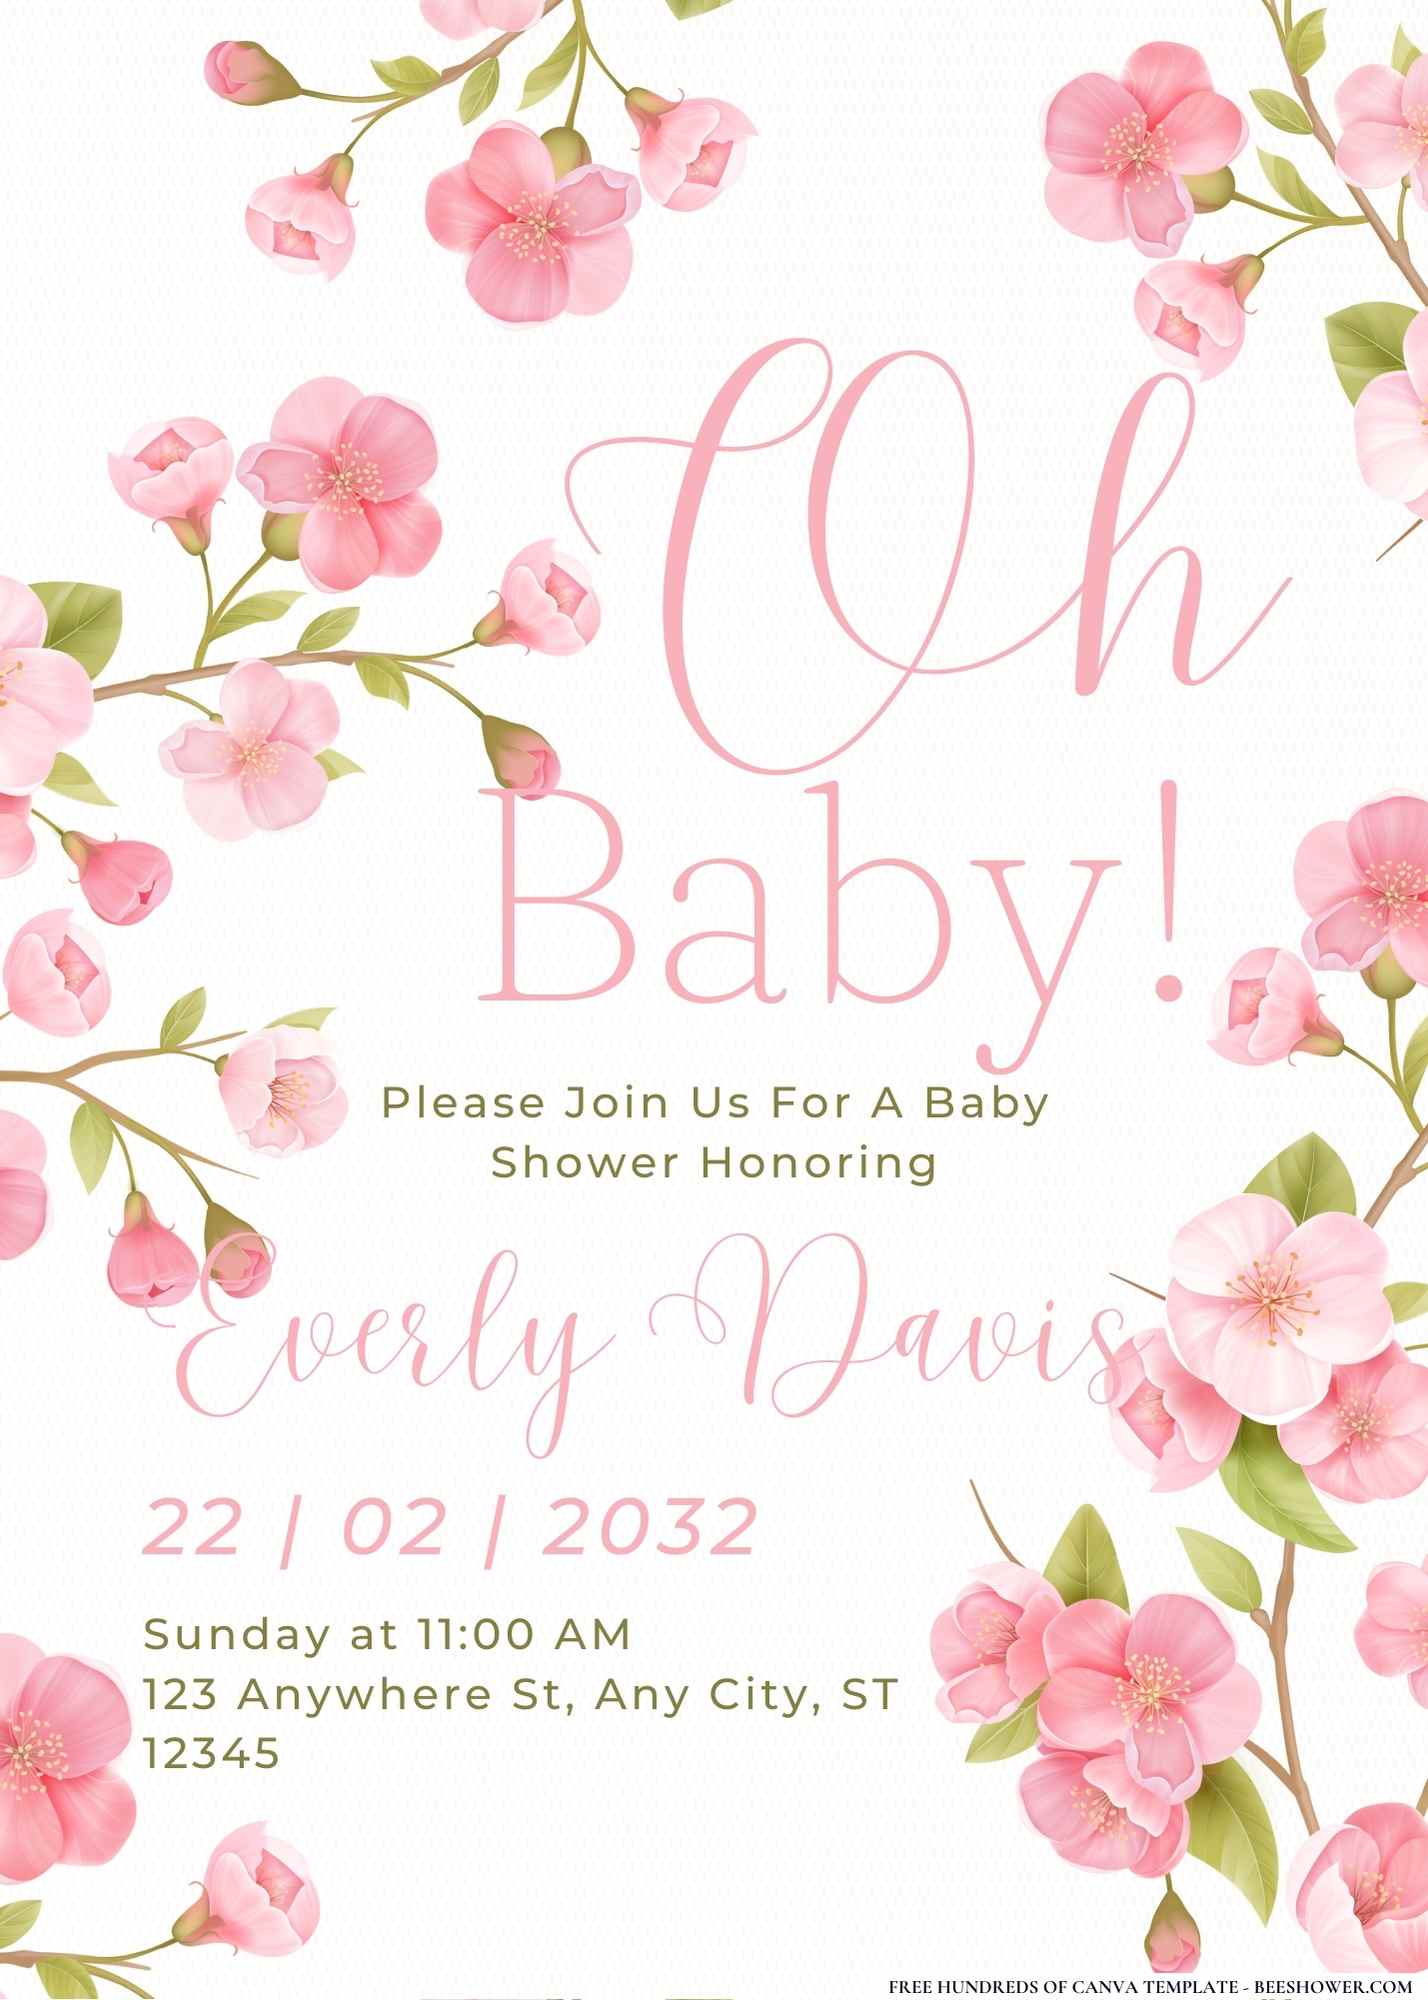 Blossom in Bloom Baby Shower Invitation